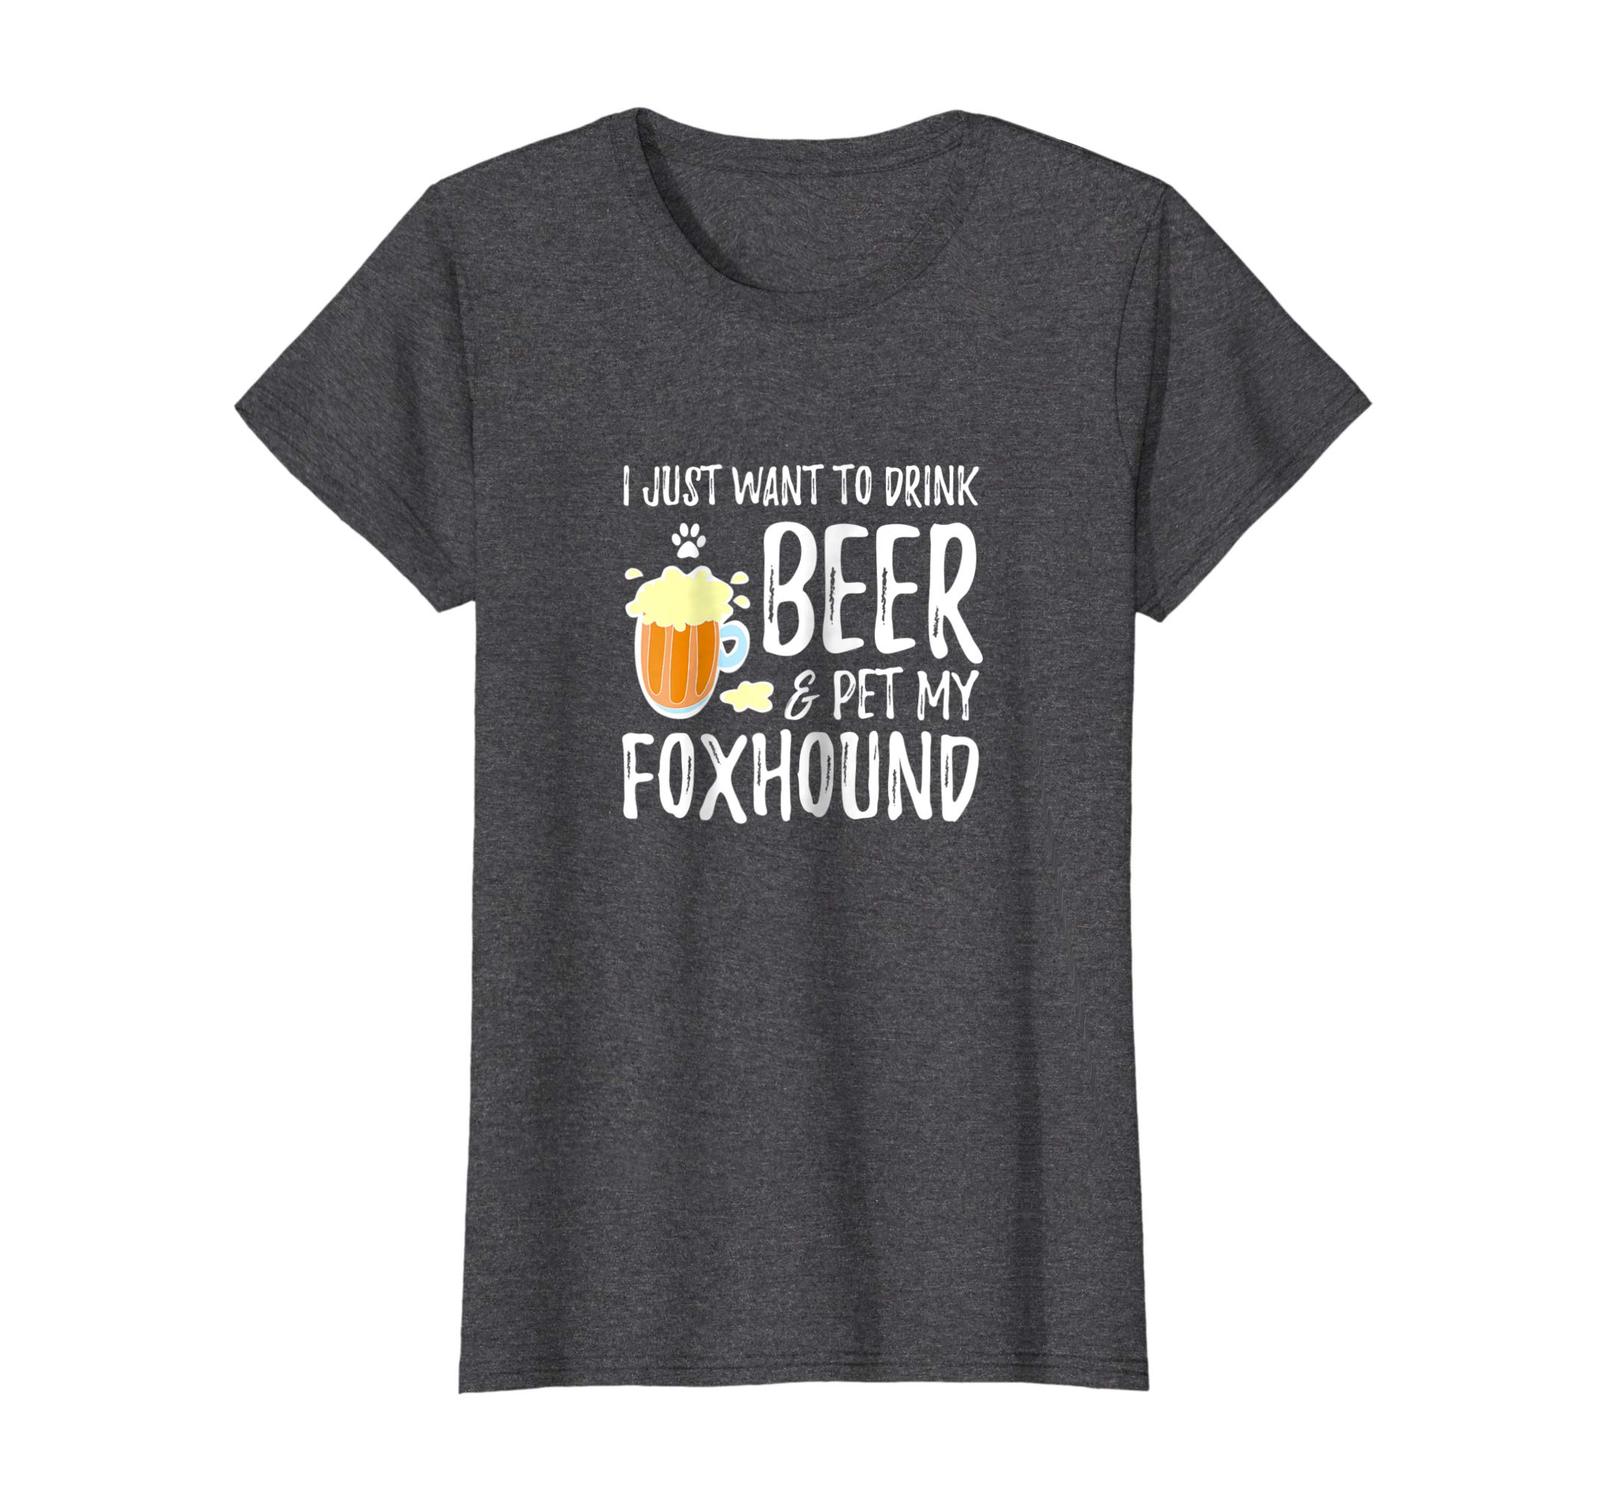 Dog Fashion - Beer and Foxhound Shirt Funny Dog Mom or Dog Dad Gift Idea Wowen